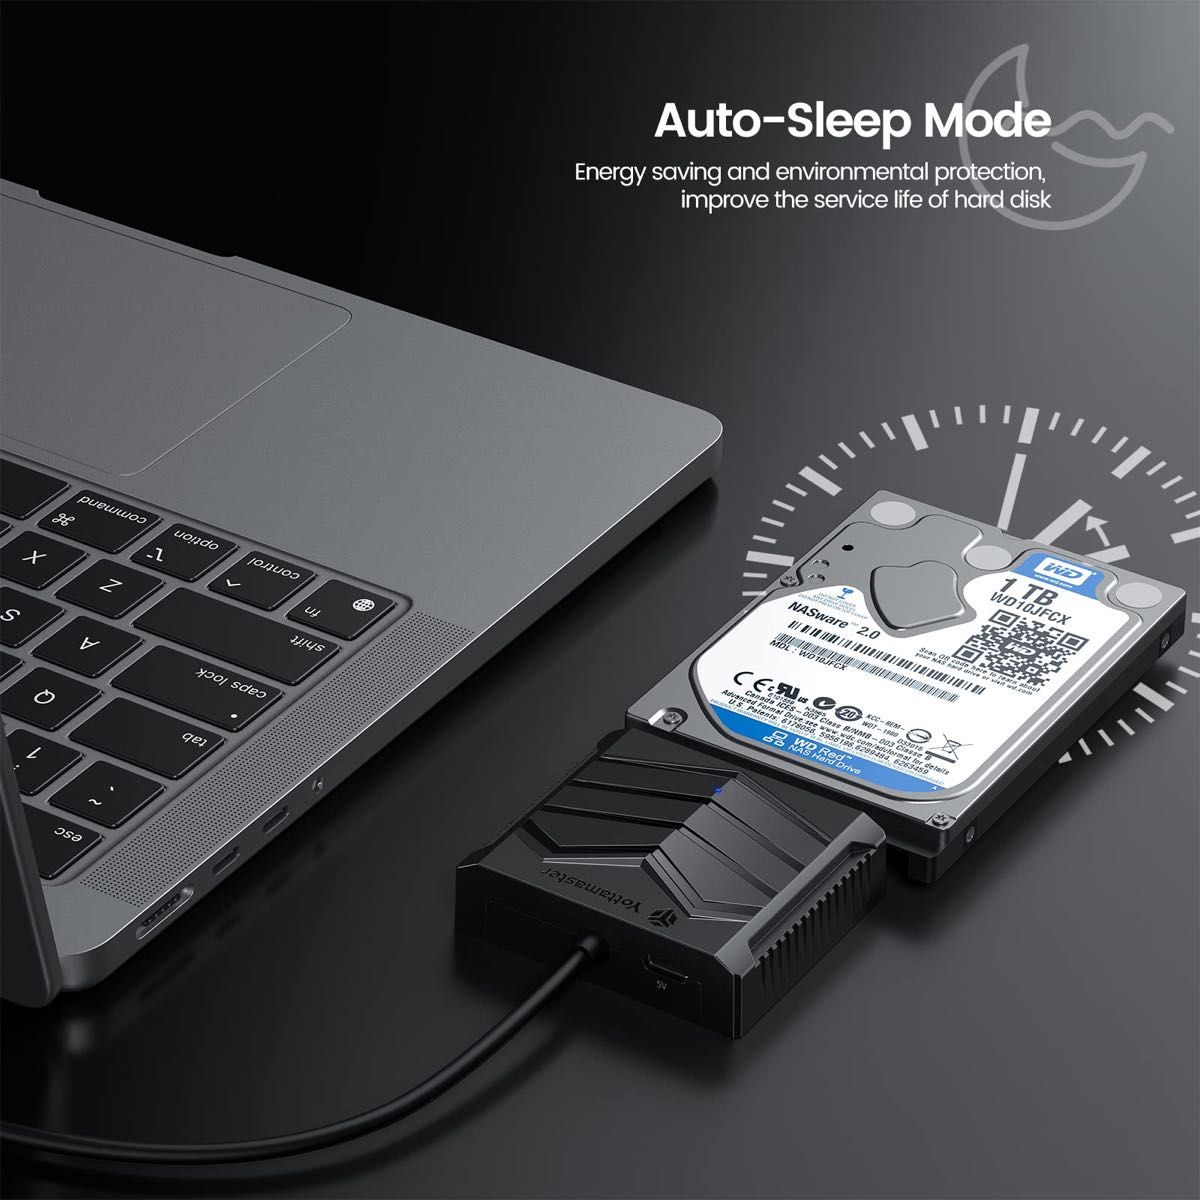 Yottamaster SATA - USB A アダプターケーブル 3.5対応 5V 電源アダプター付き - 0.5m ケーブル